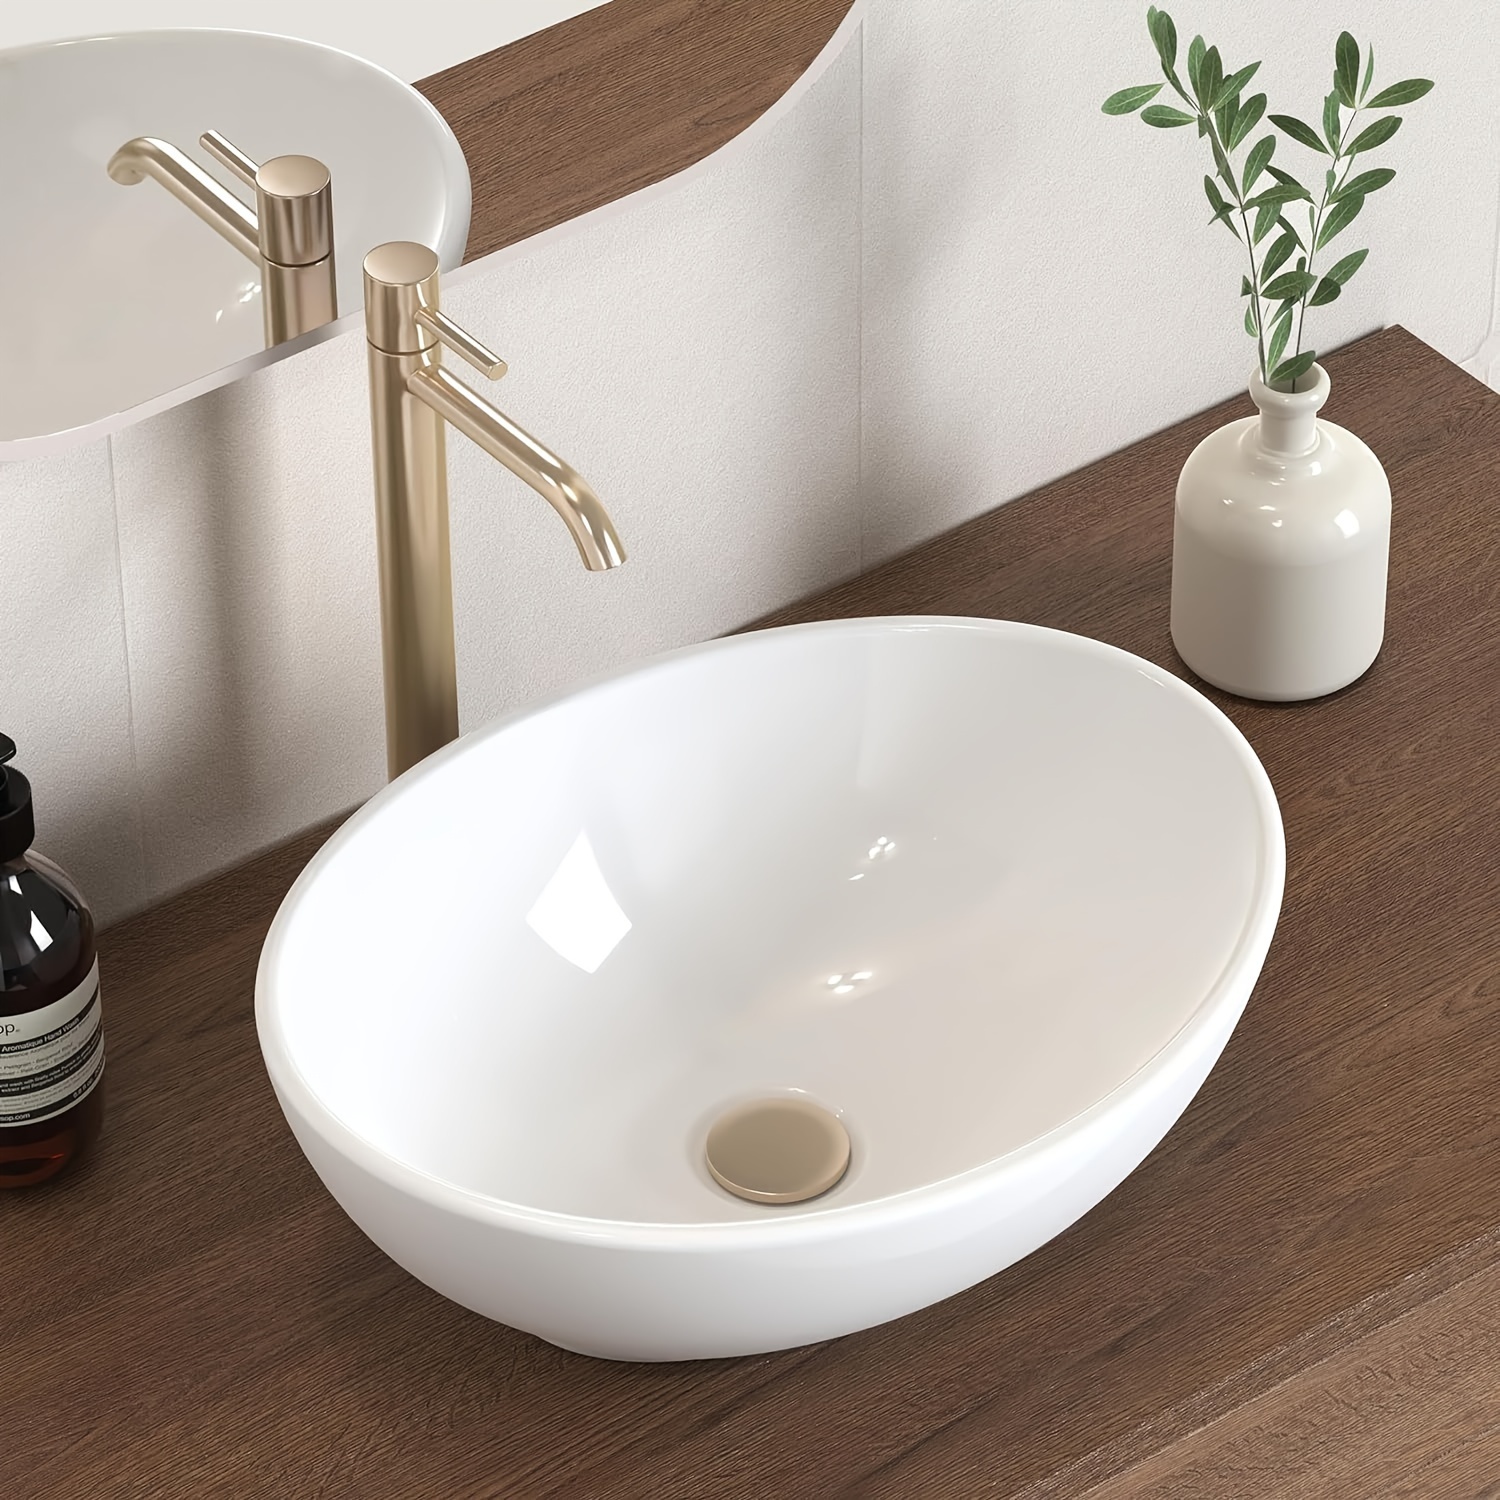 

1pc White Oval Bathroom Vessel Sink, Large Volume Bowl-shaped Ceramic Vanity Basin, For Bathroom Use, Ideal Bathroom Supplies